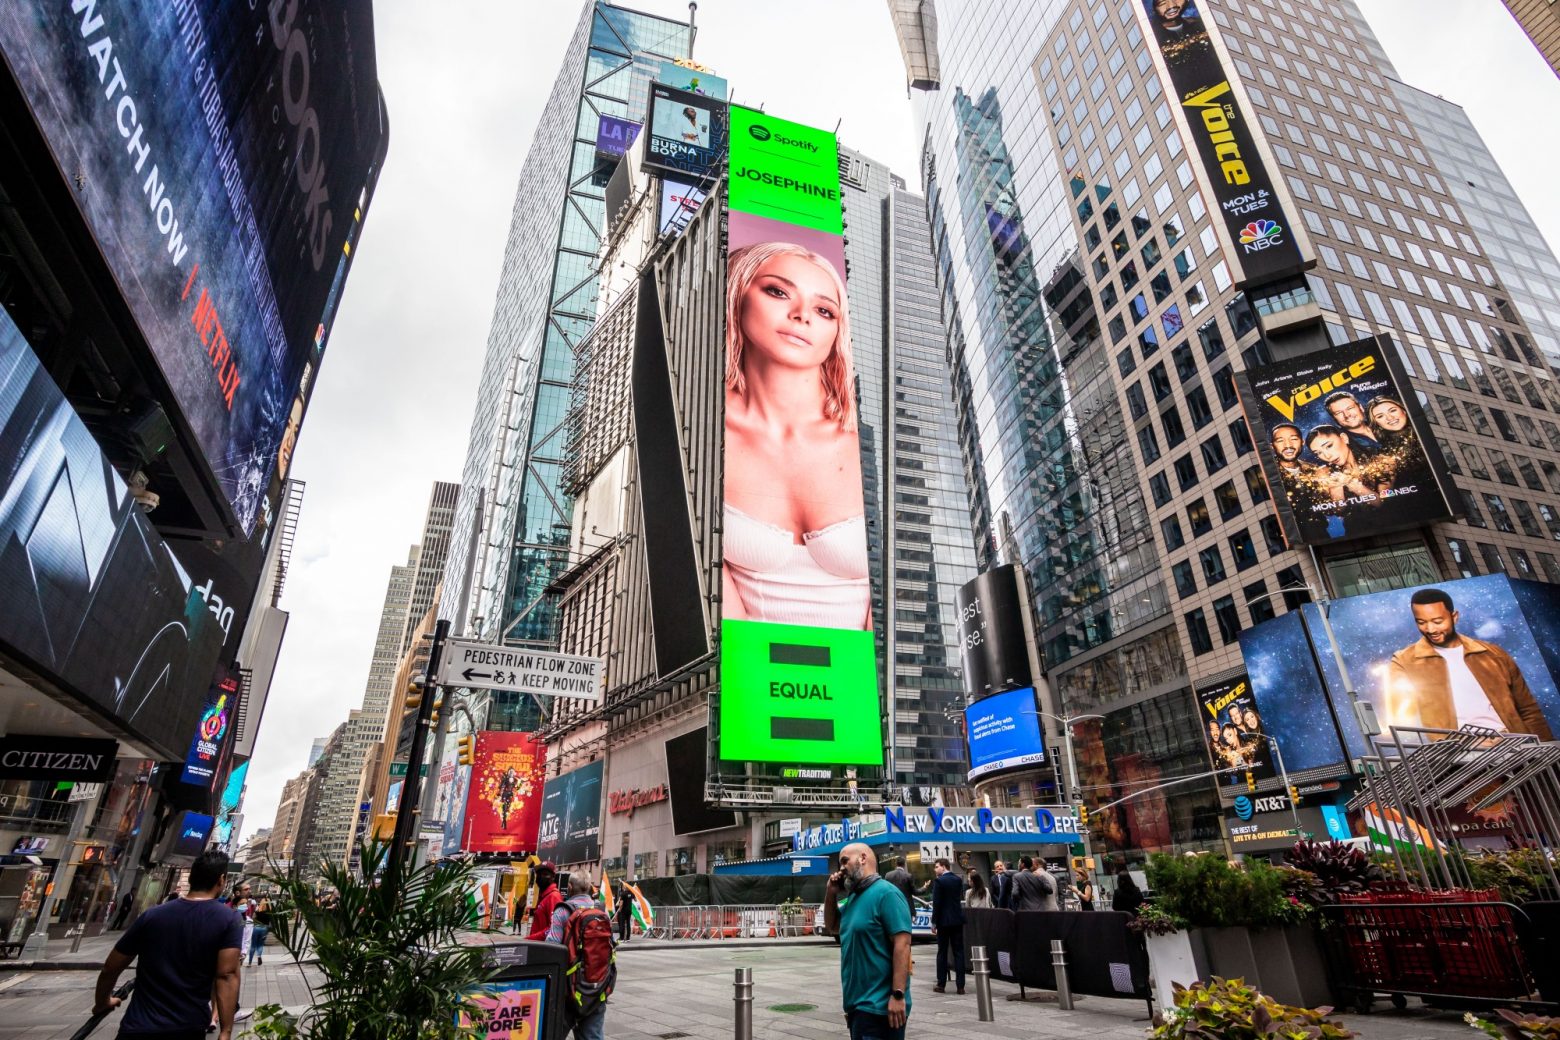 JOSEPHINE - Γιατί μπήκε σε billboard στην Times Square της Νέας Υόρκης;